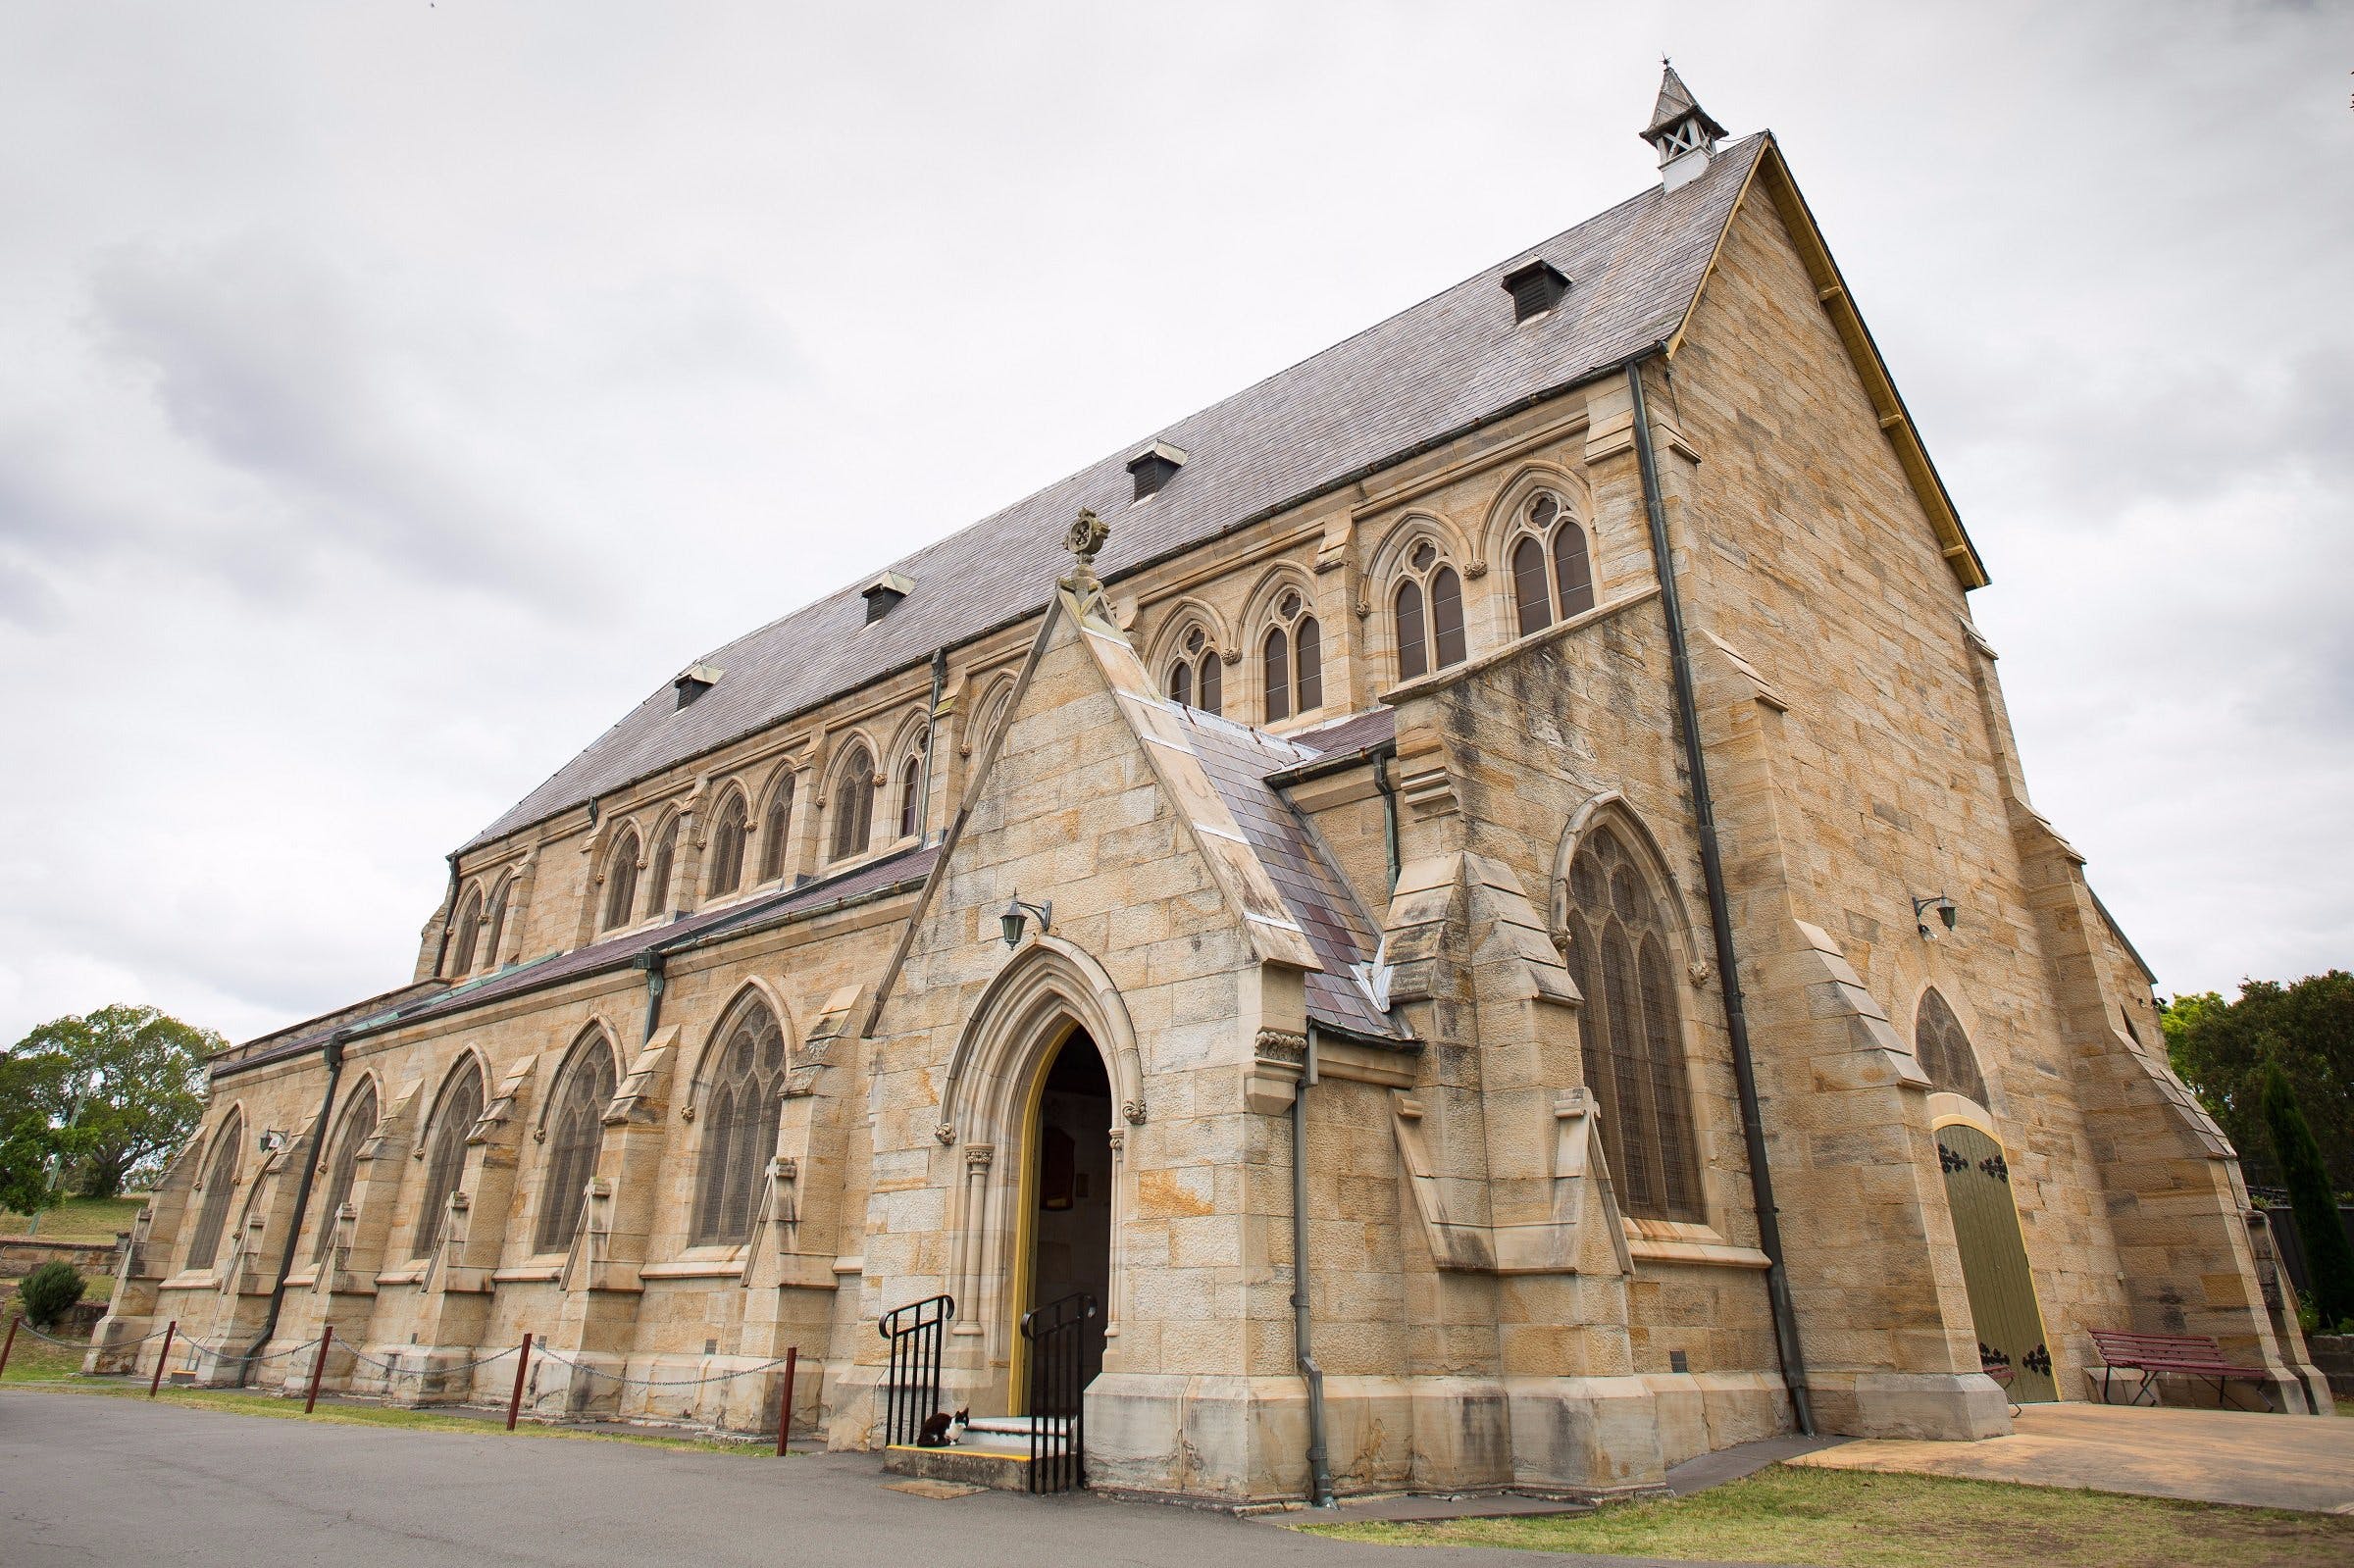 St Peters Anglican Church - Accommodation Sunshine Coast